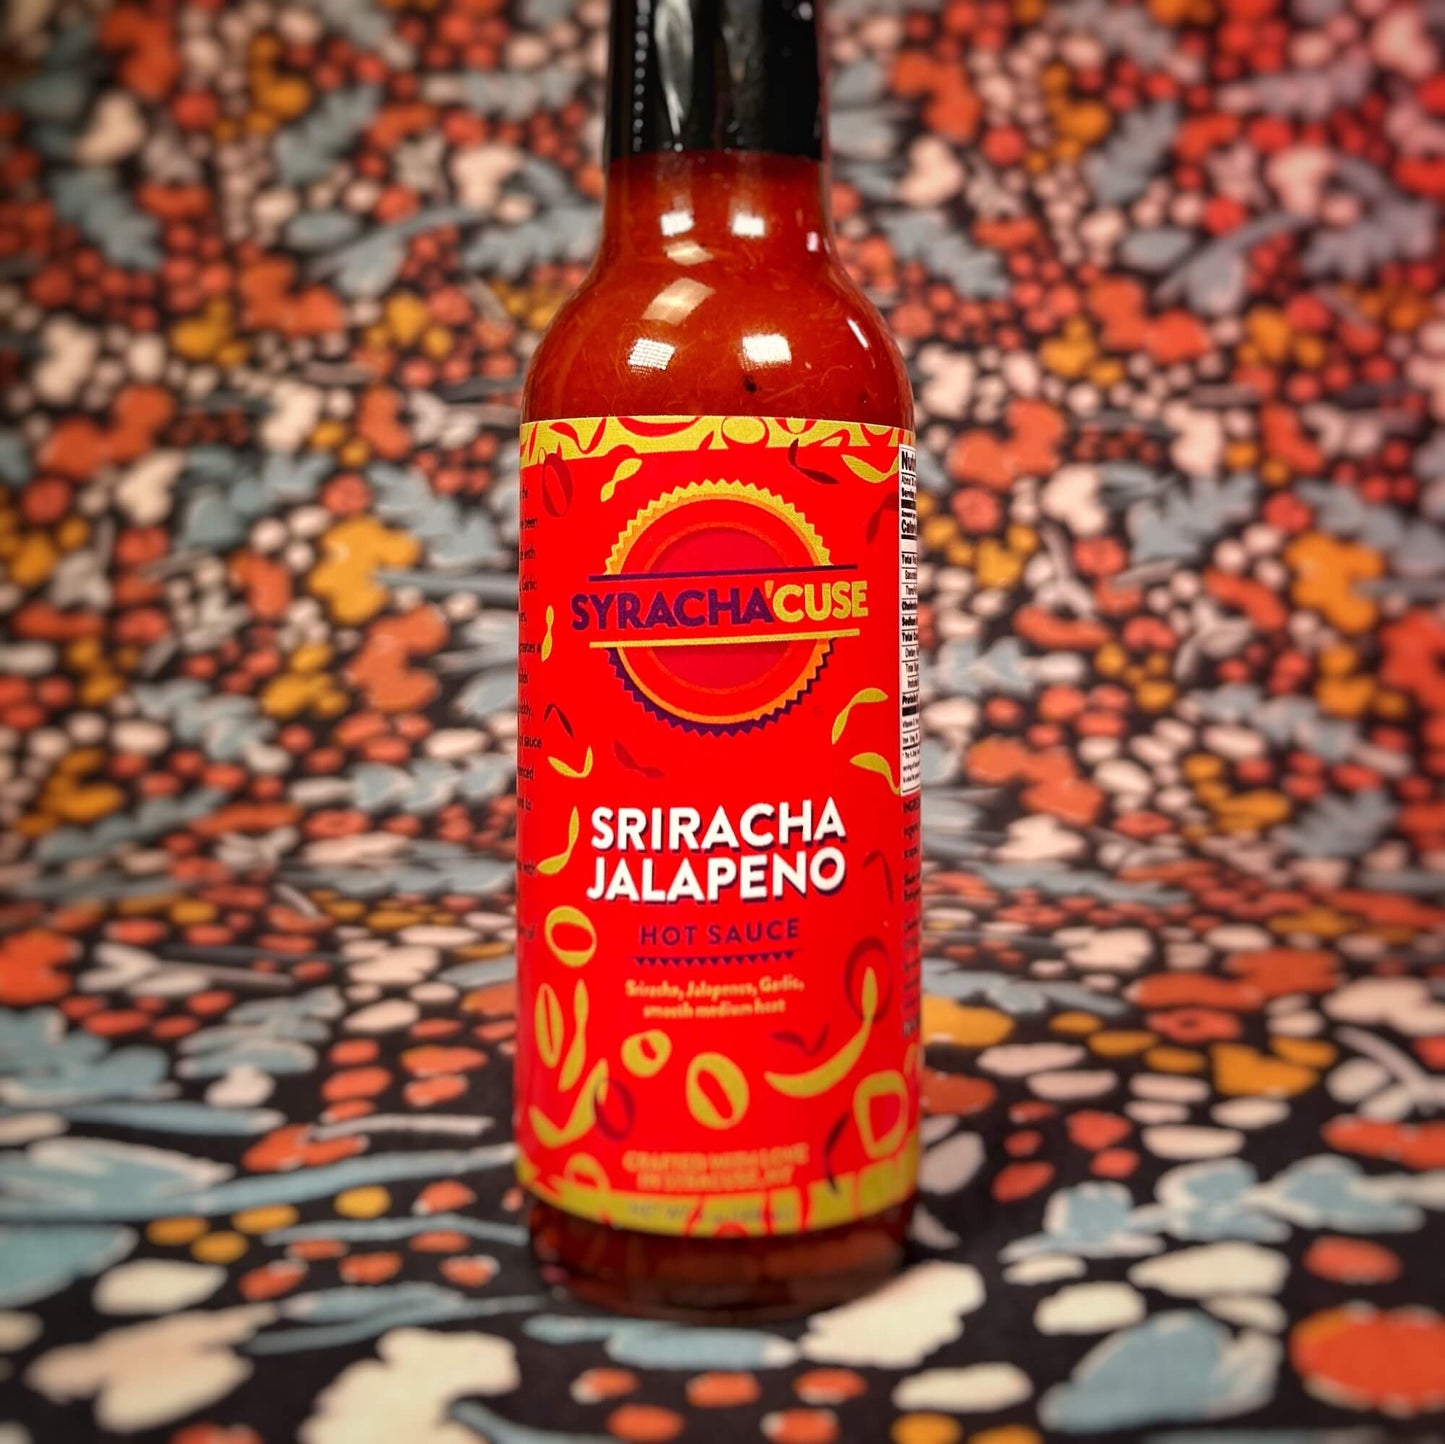 SRIRACHA JALAPENO HOT SAUCE, The Sriracha Sauce you’ve been searching for!